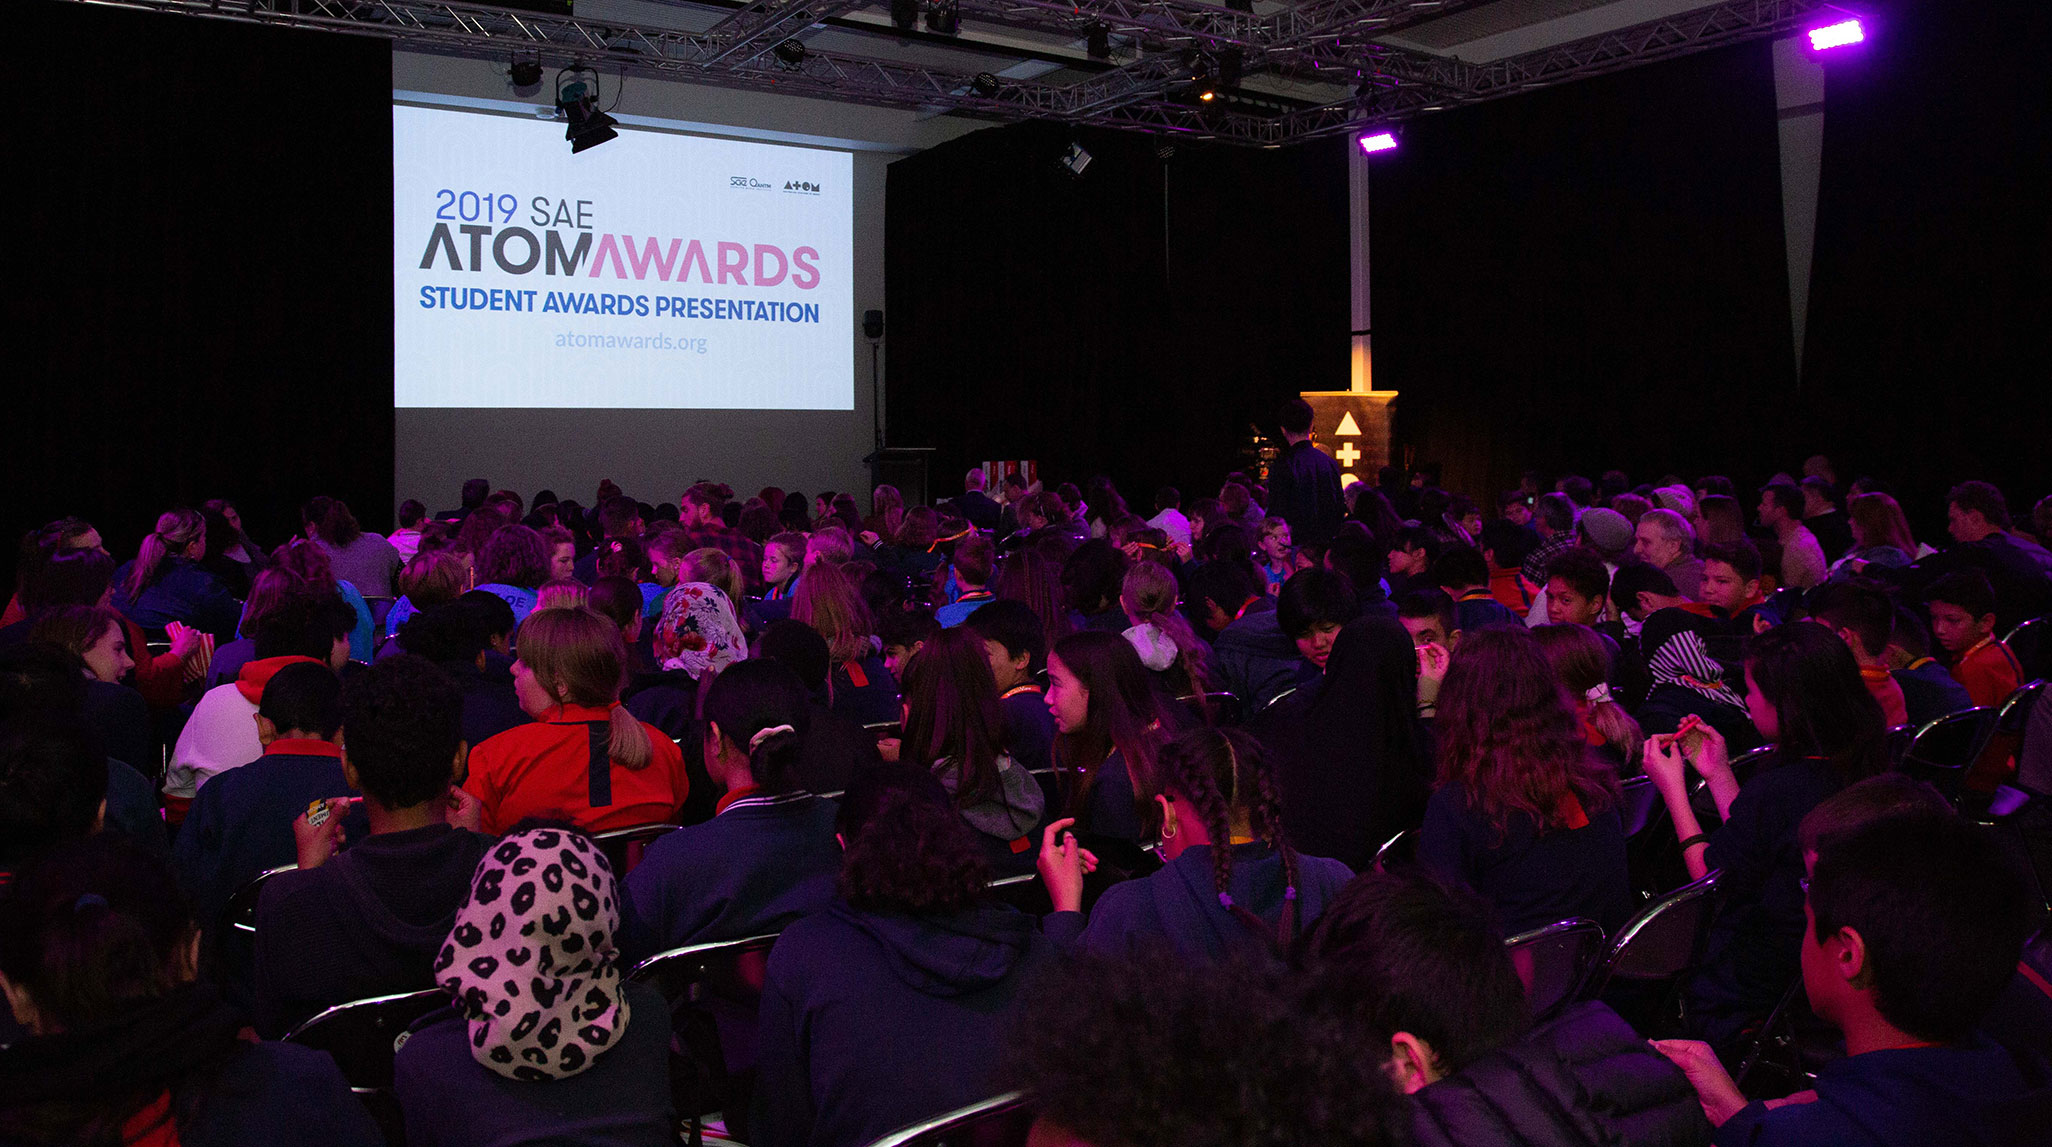 2019 SAE ATOM Awards Student Awards Presentation